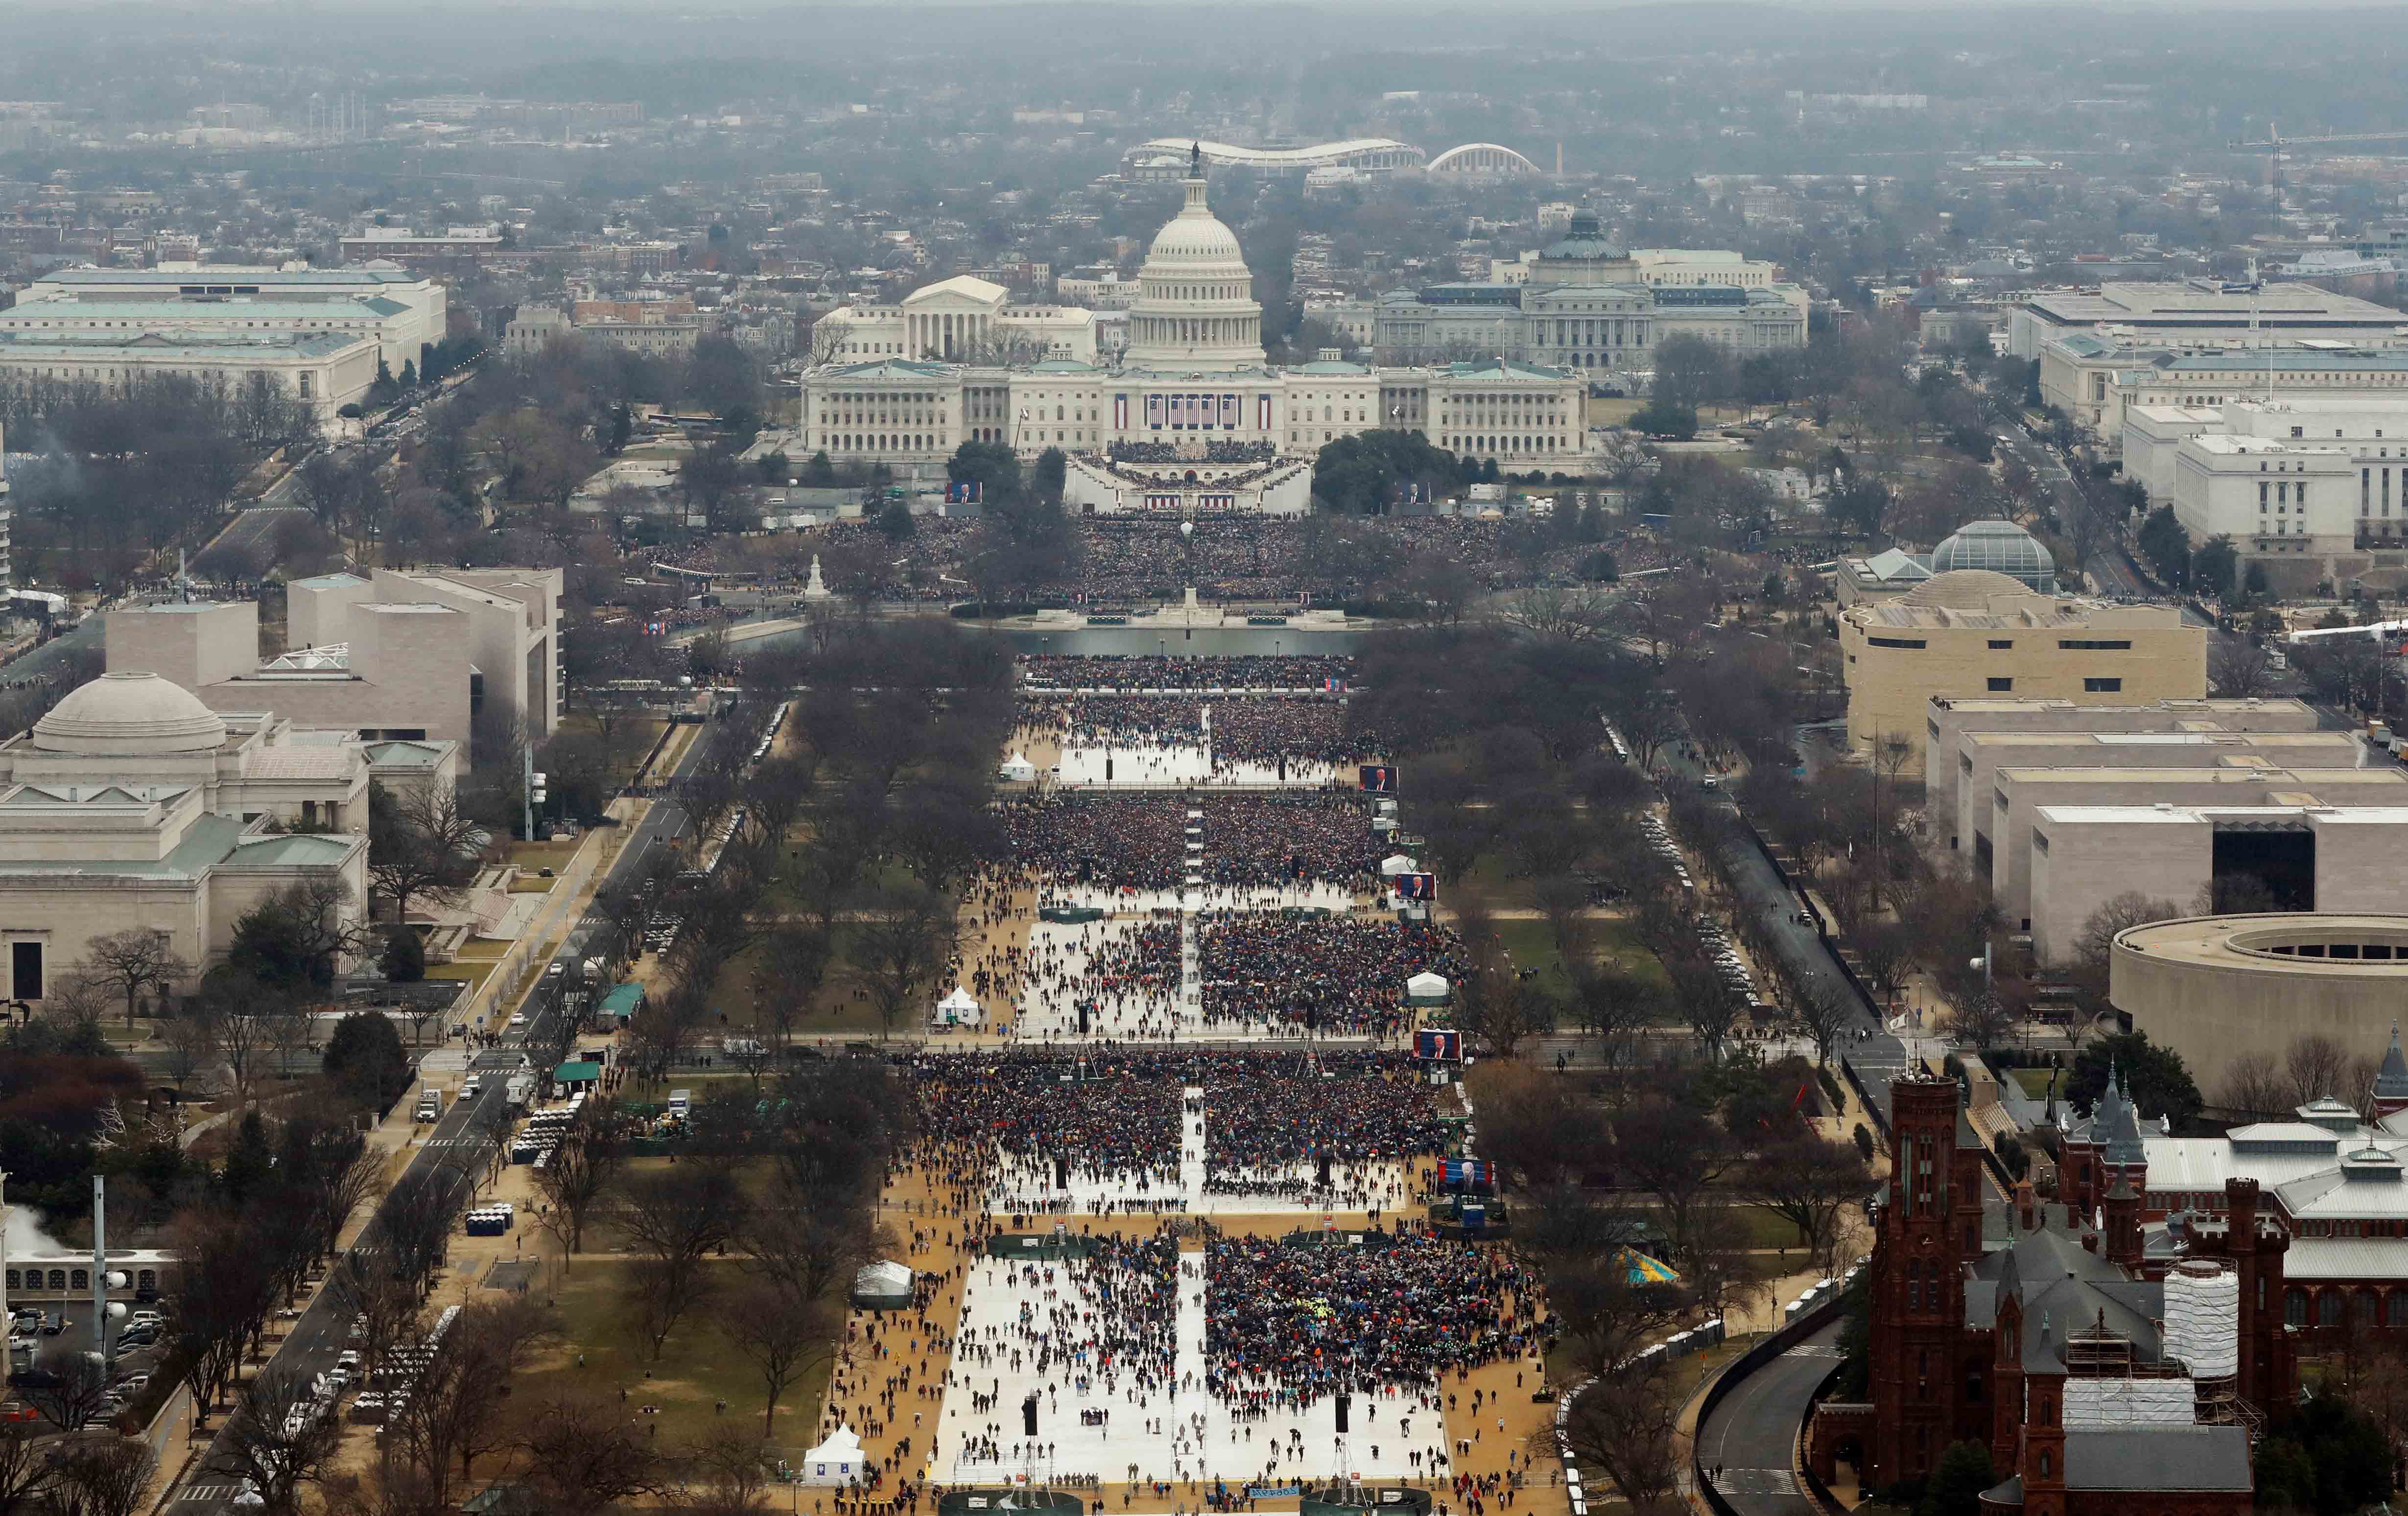 Donald Trump's inauguration.